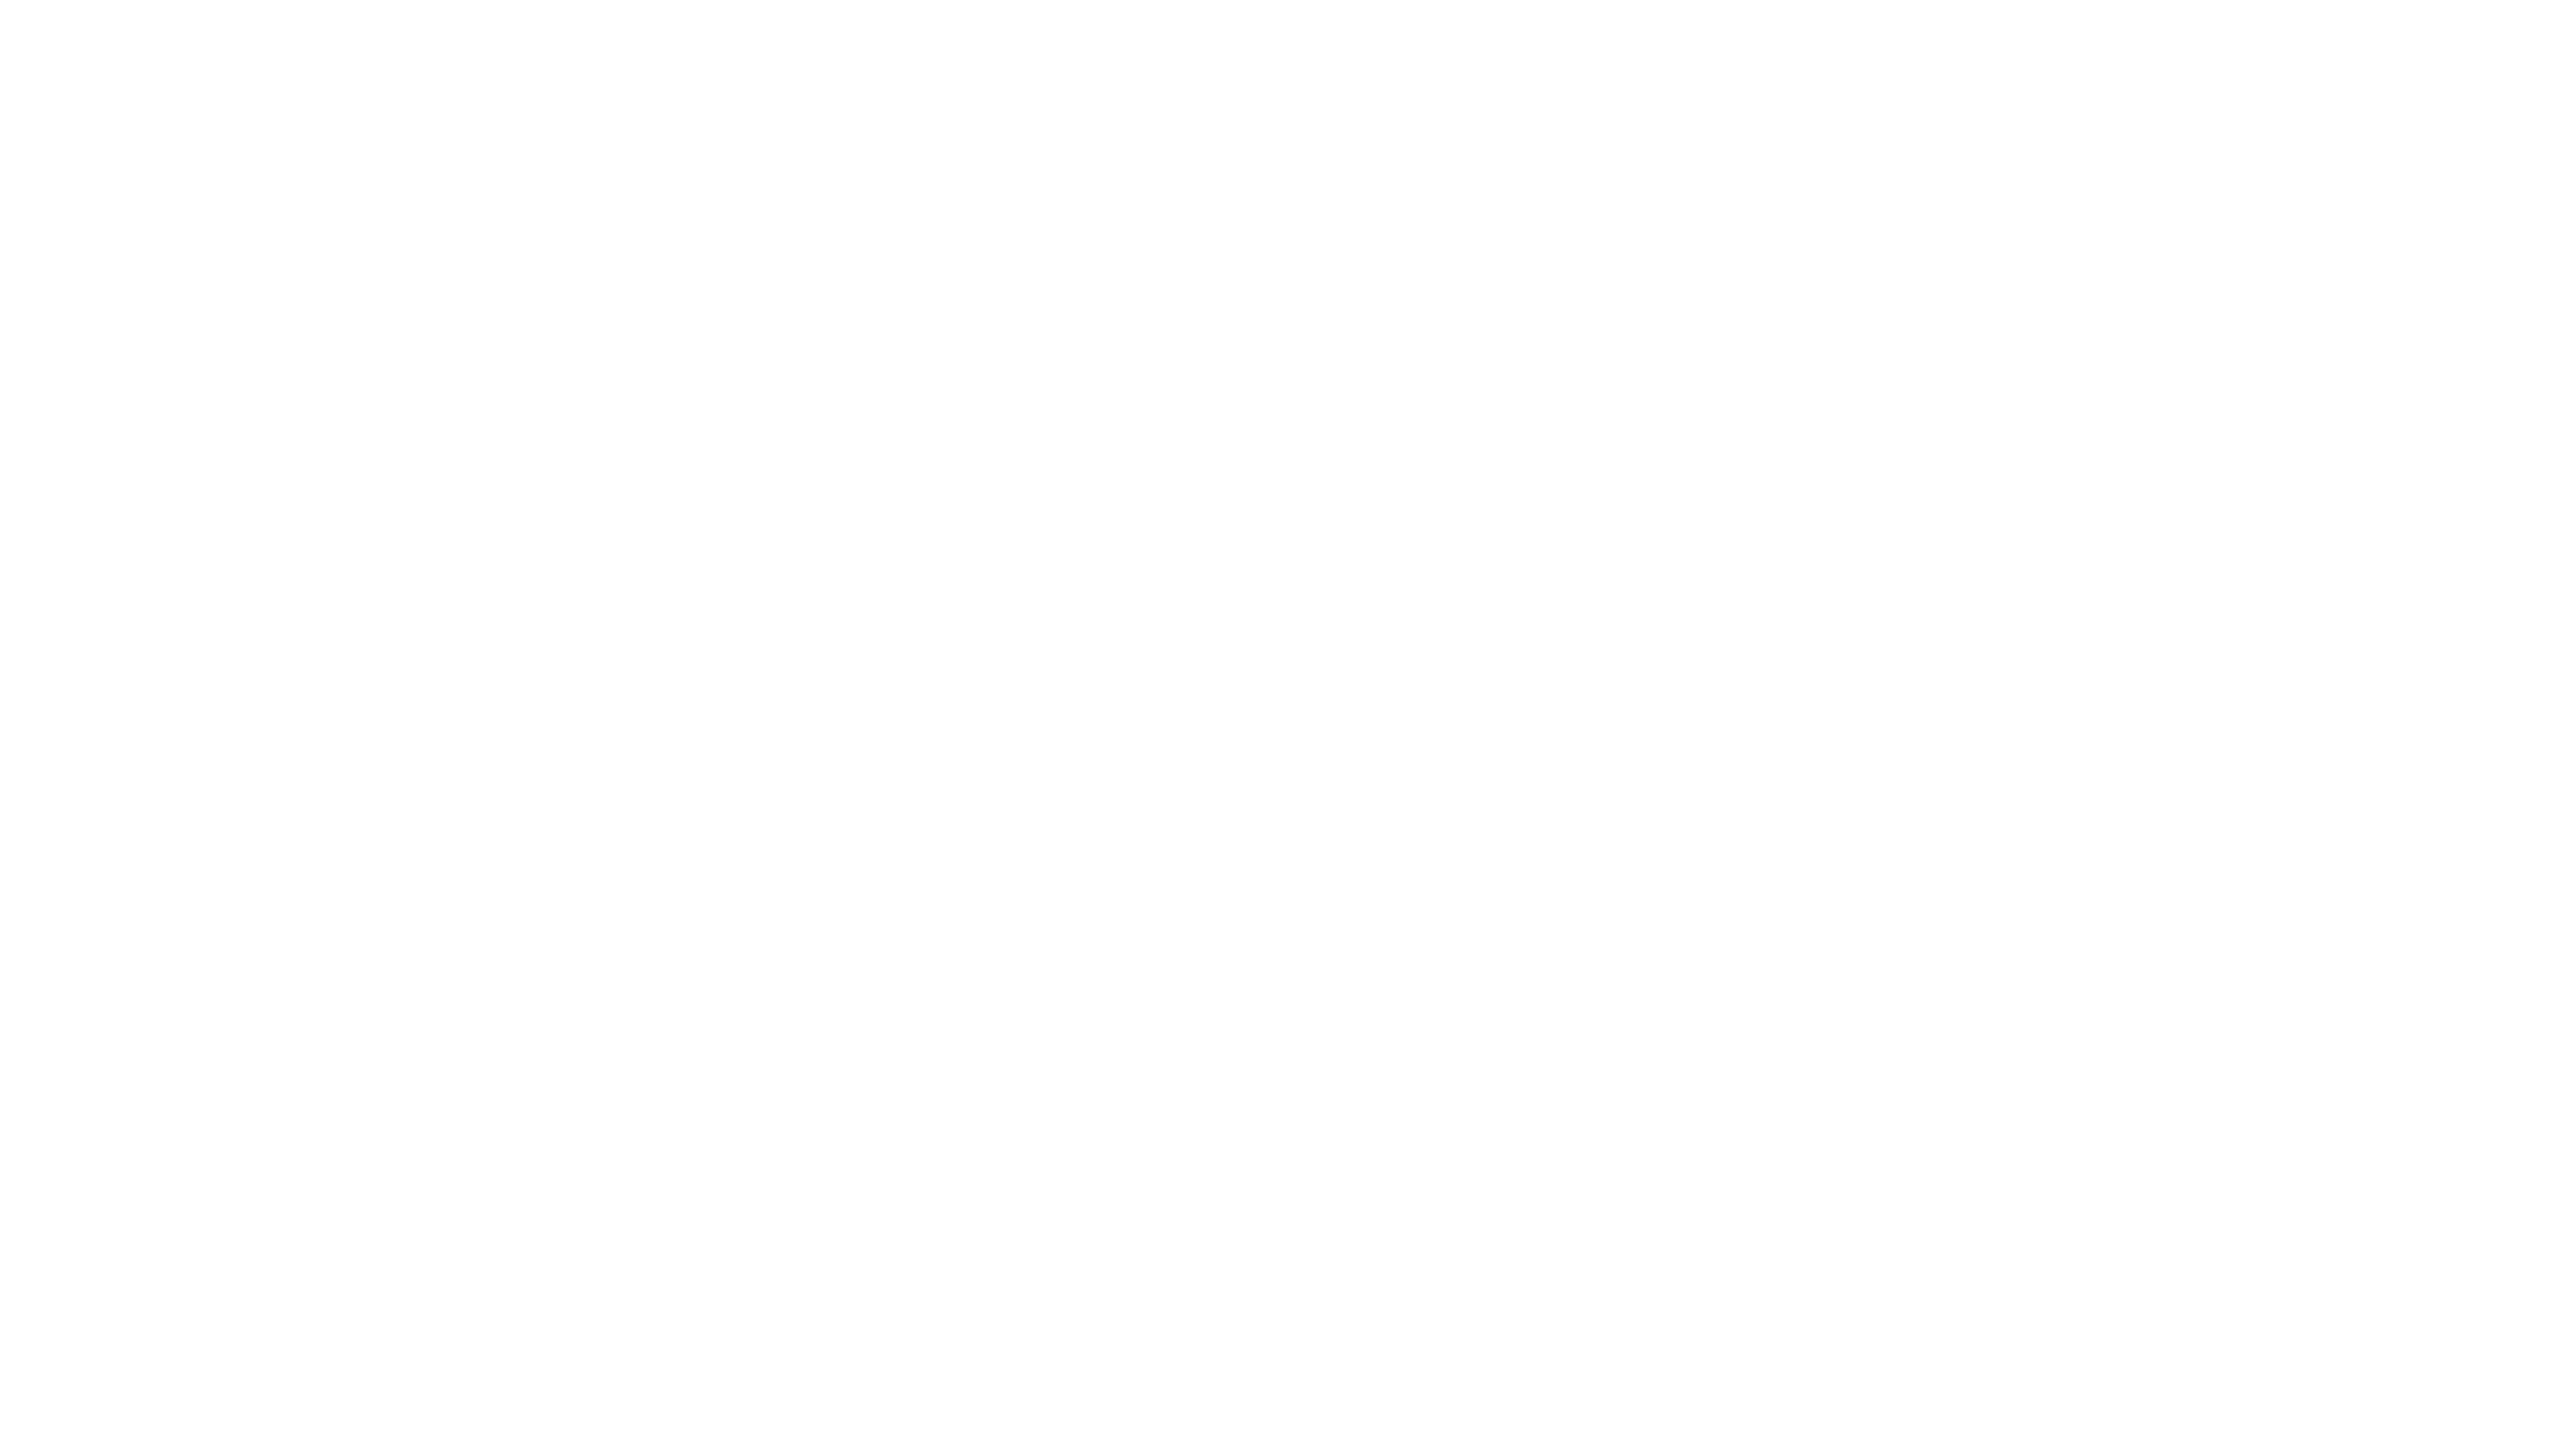 SANTOS CABRITOS